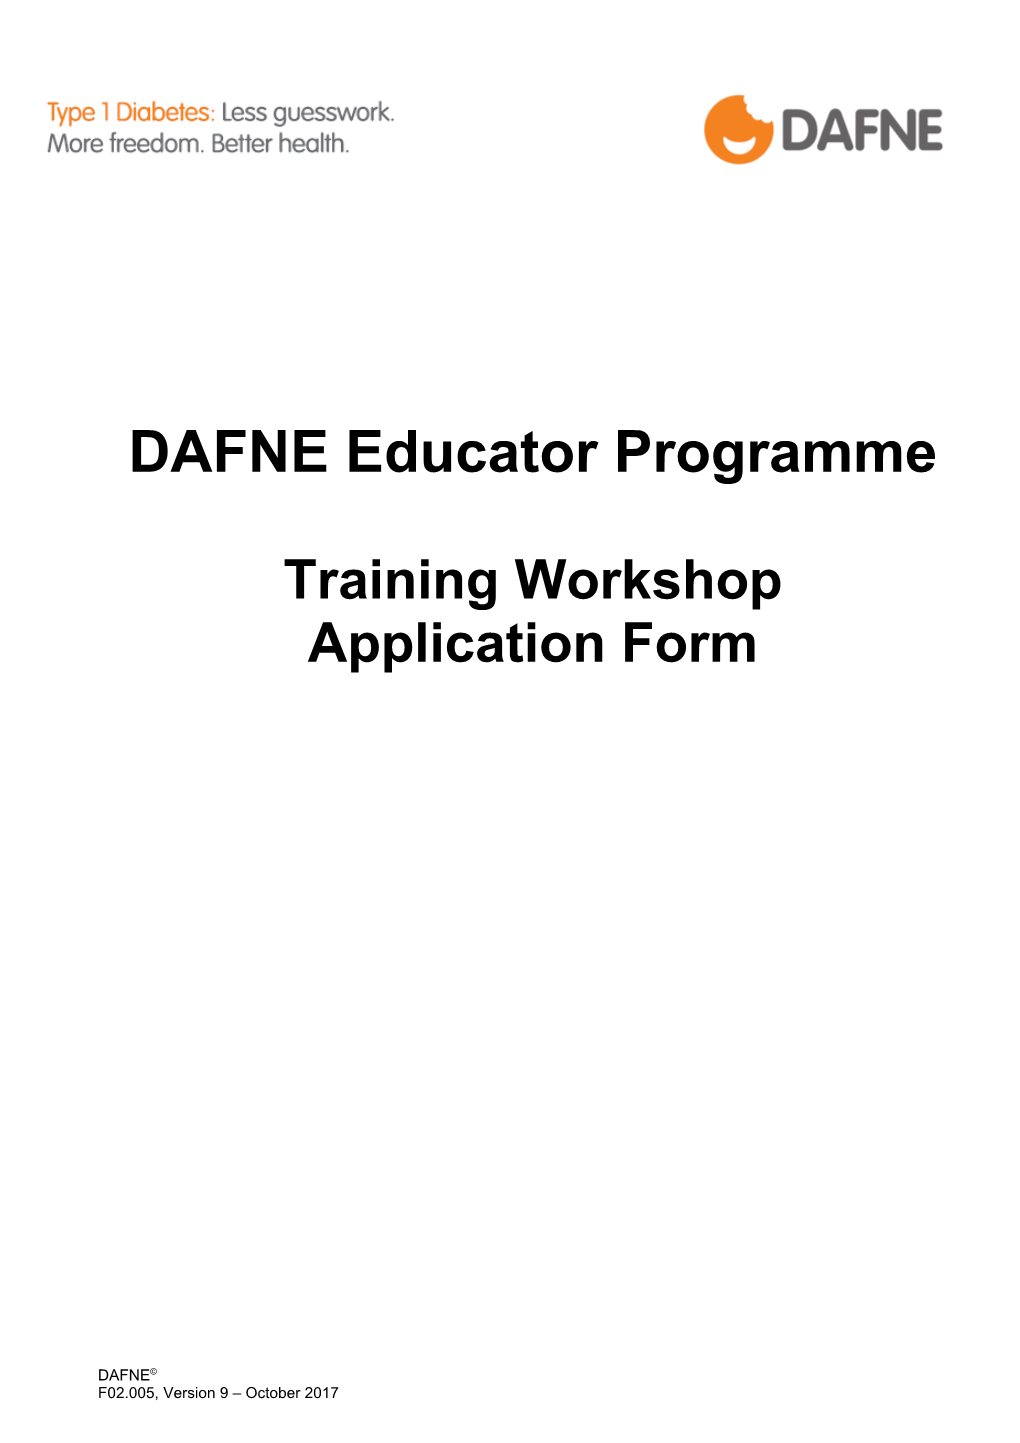 DAFNE Educator Programme